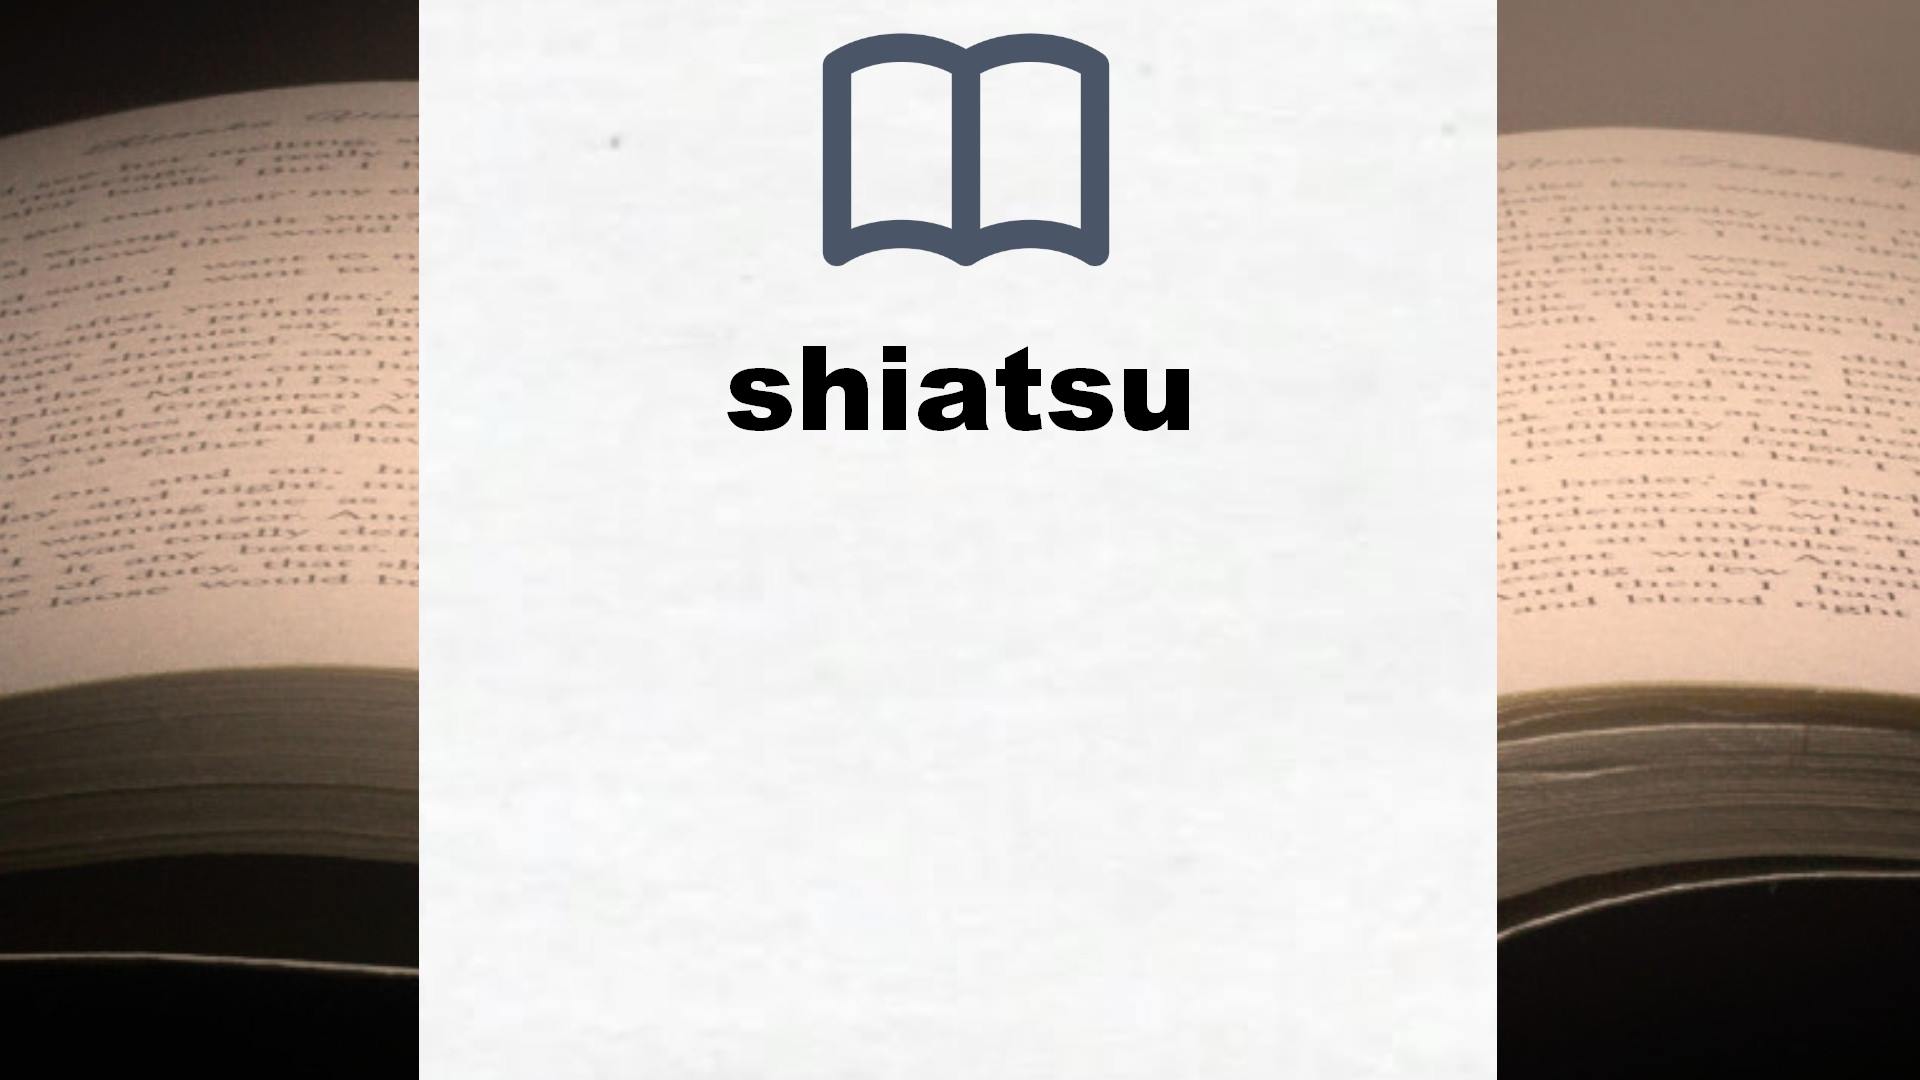 Libros sobre shiatsu